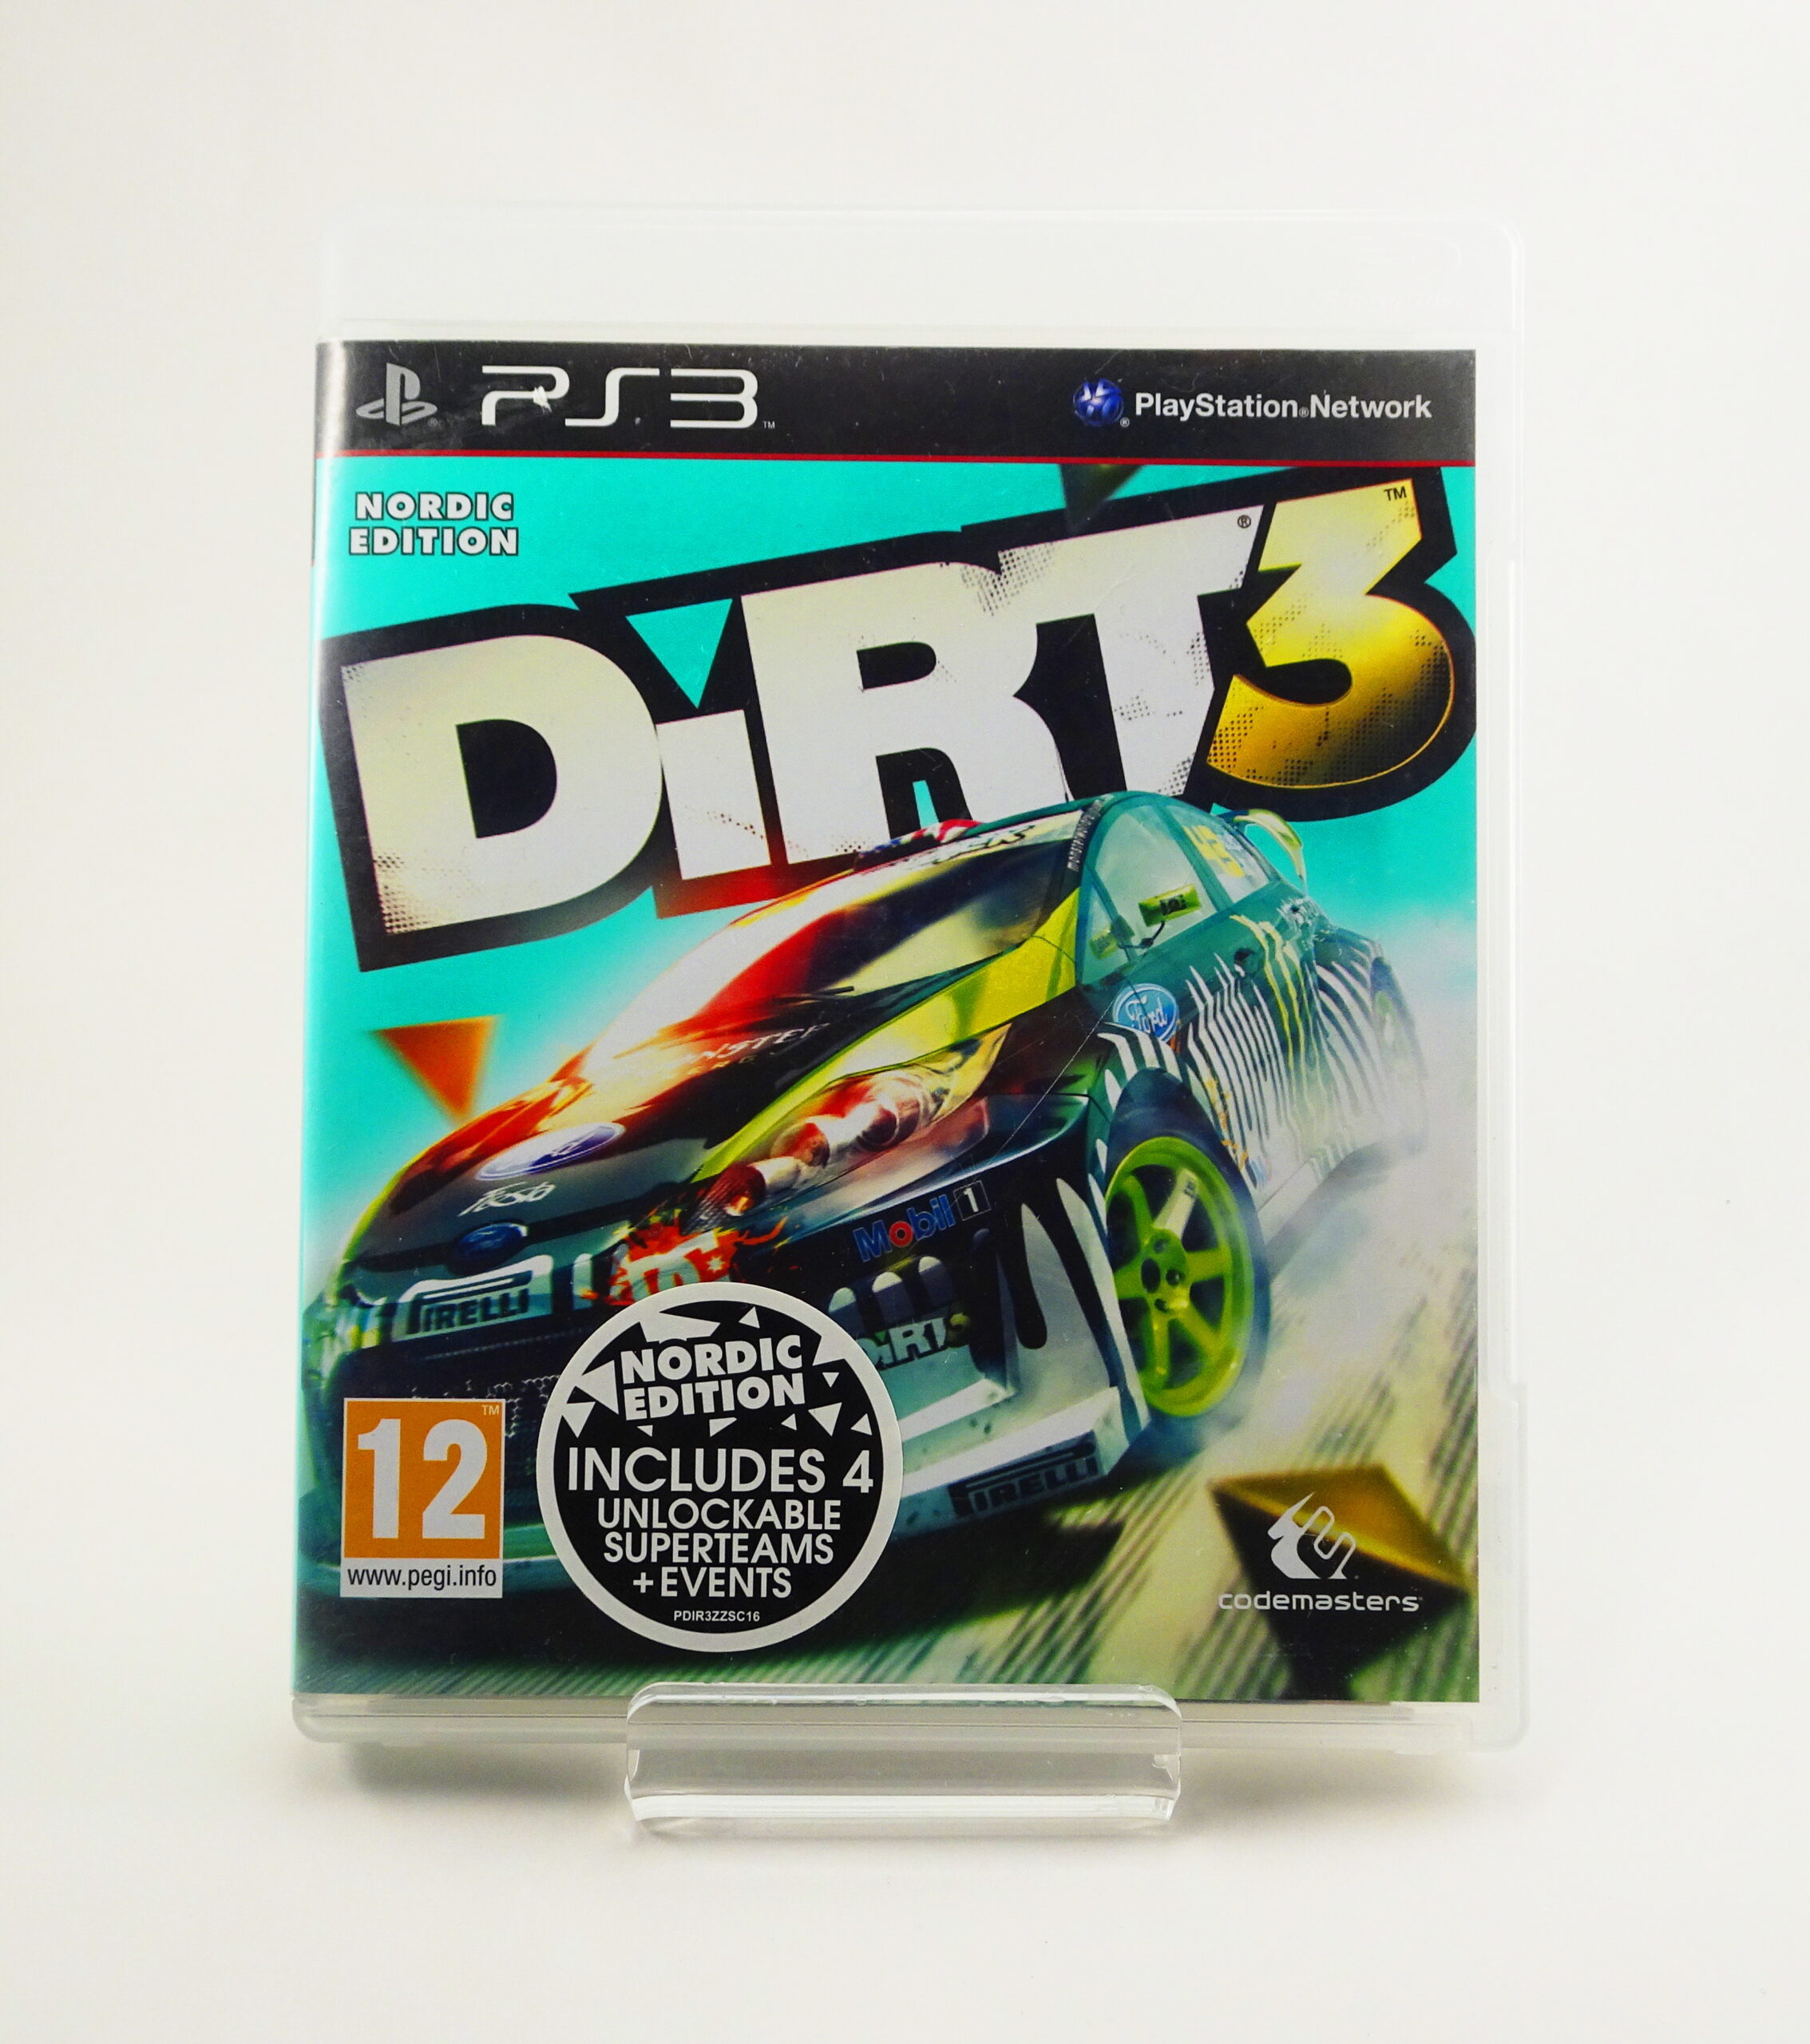 Dirt 3 (PS3)